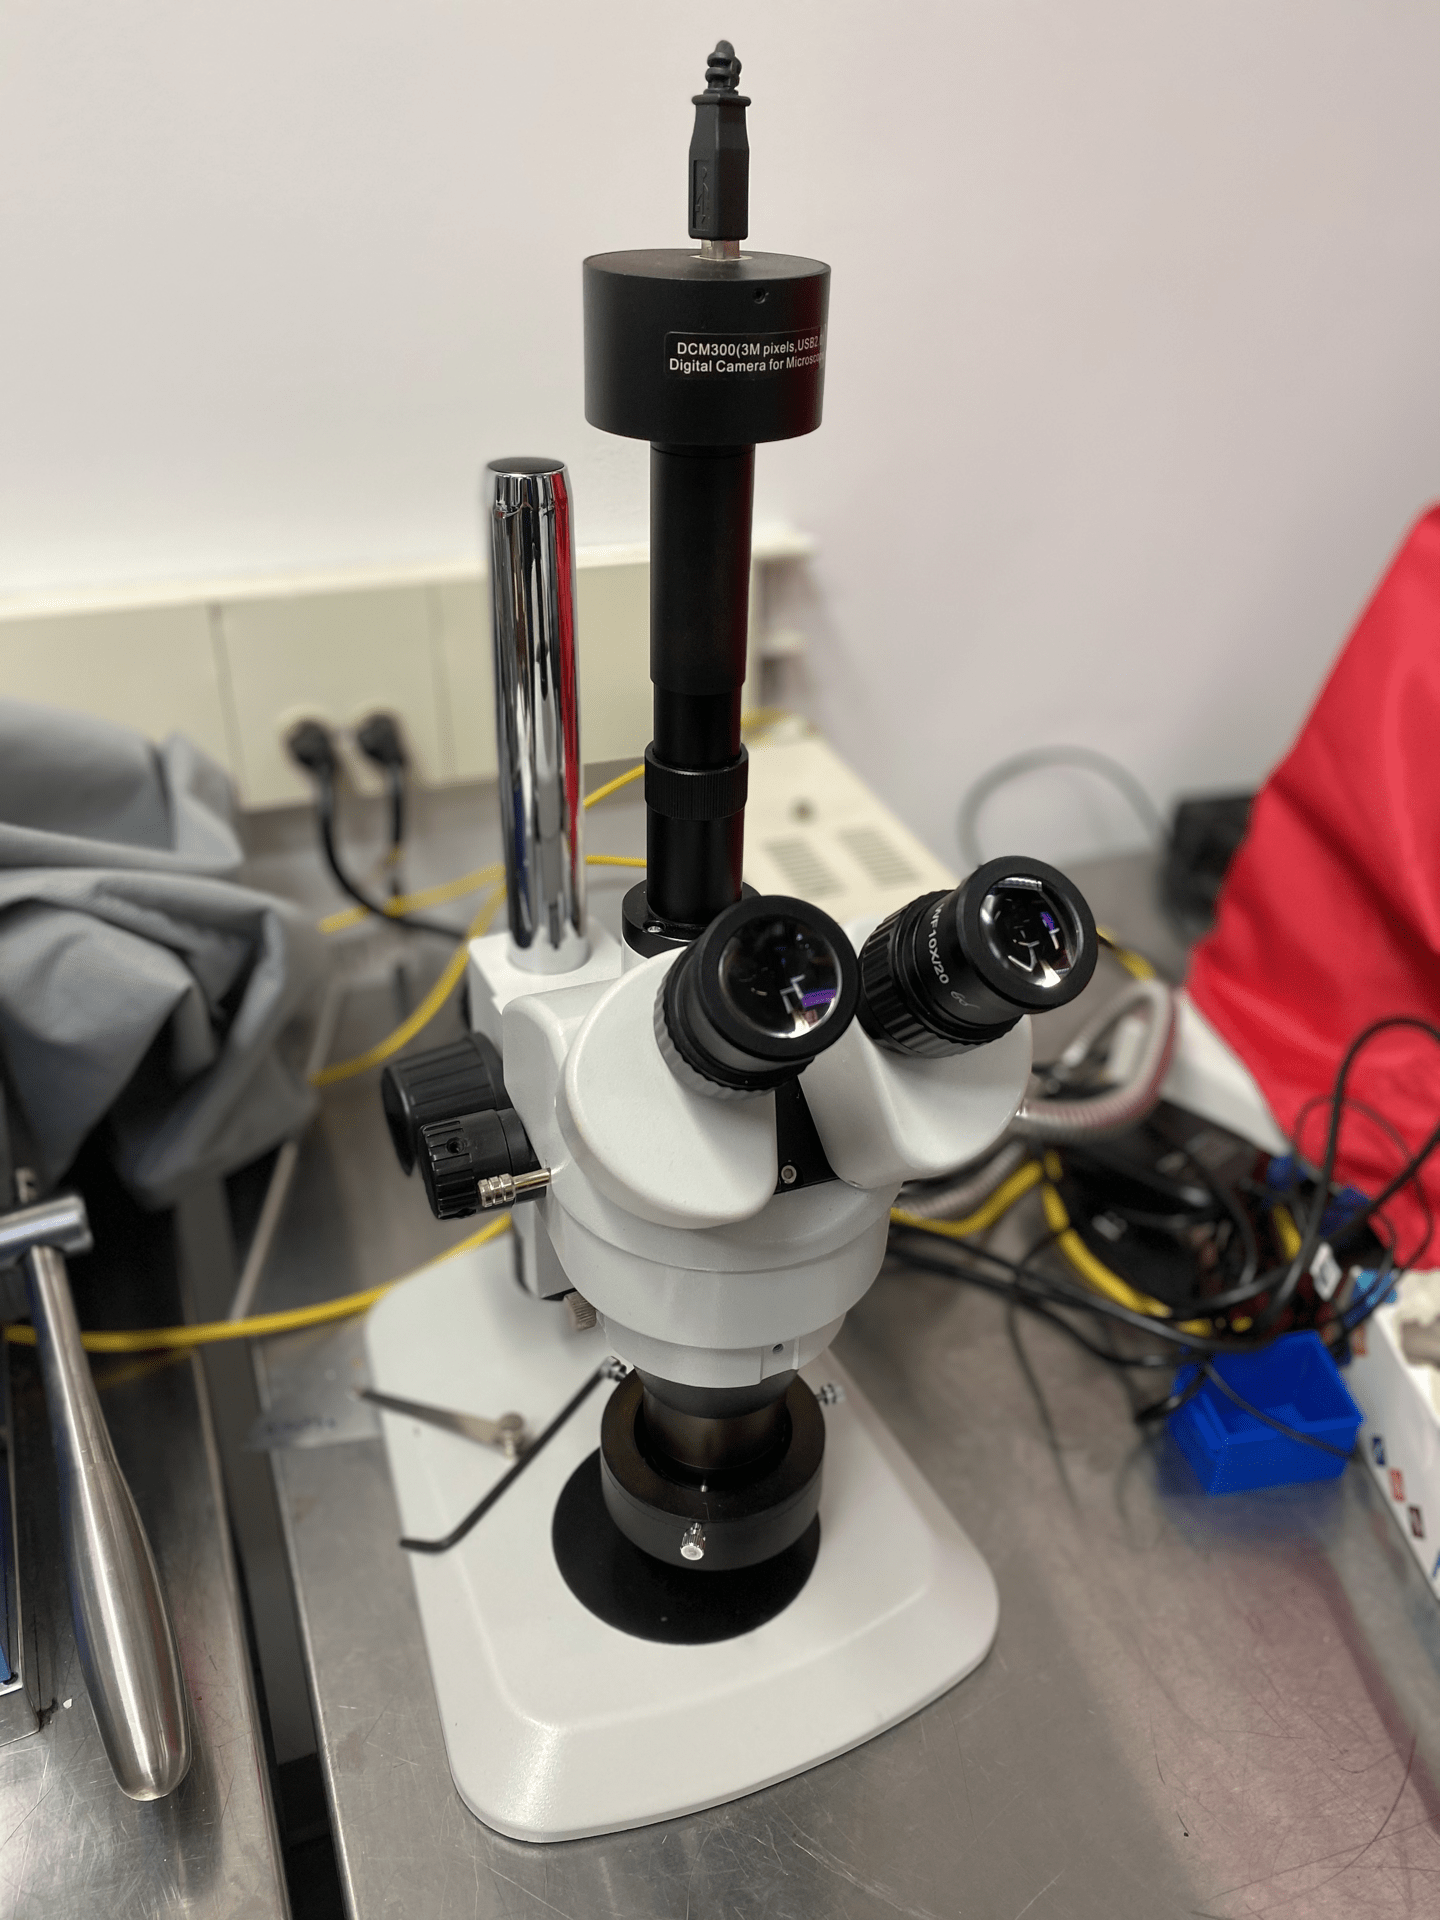 DCM300 Optical Stereomicroscope